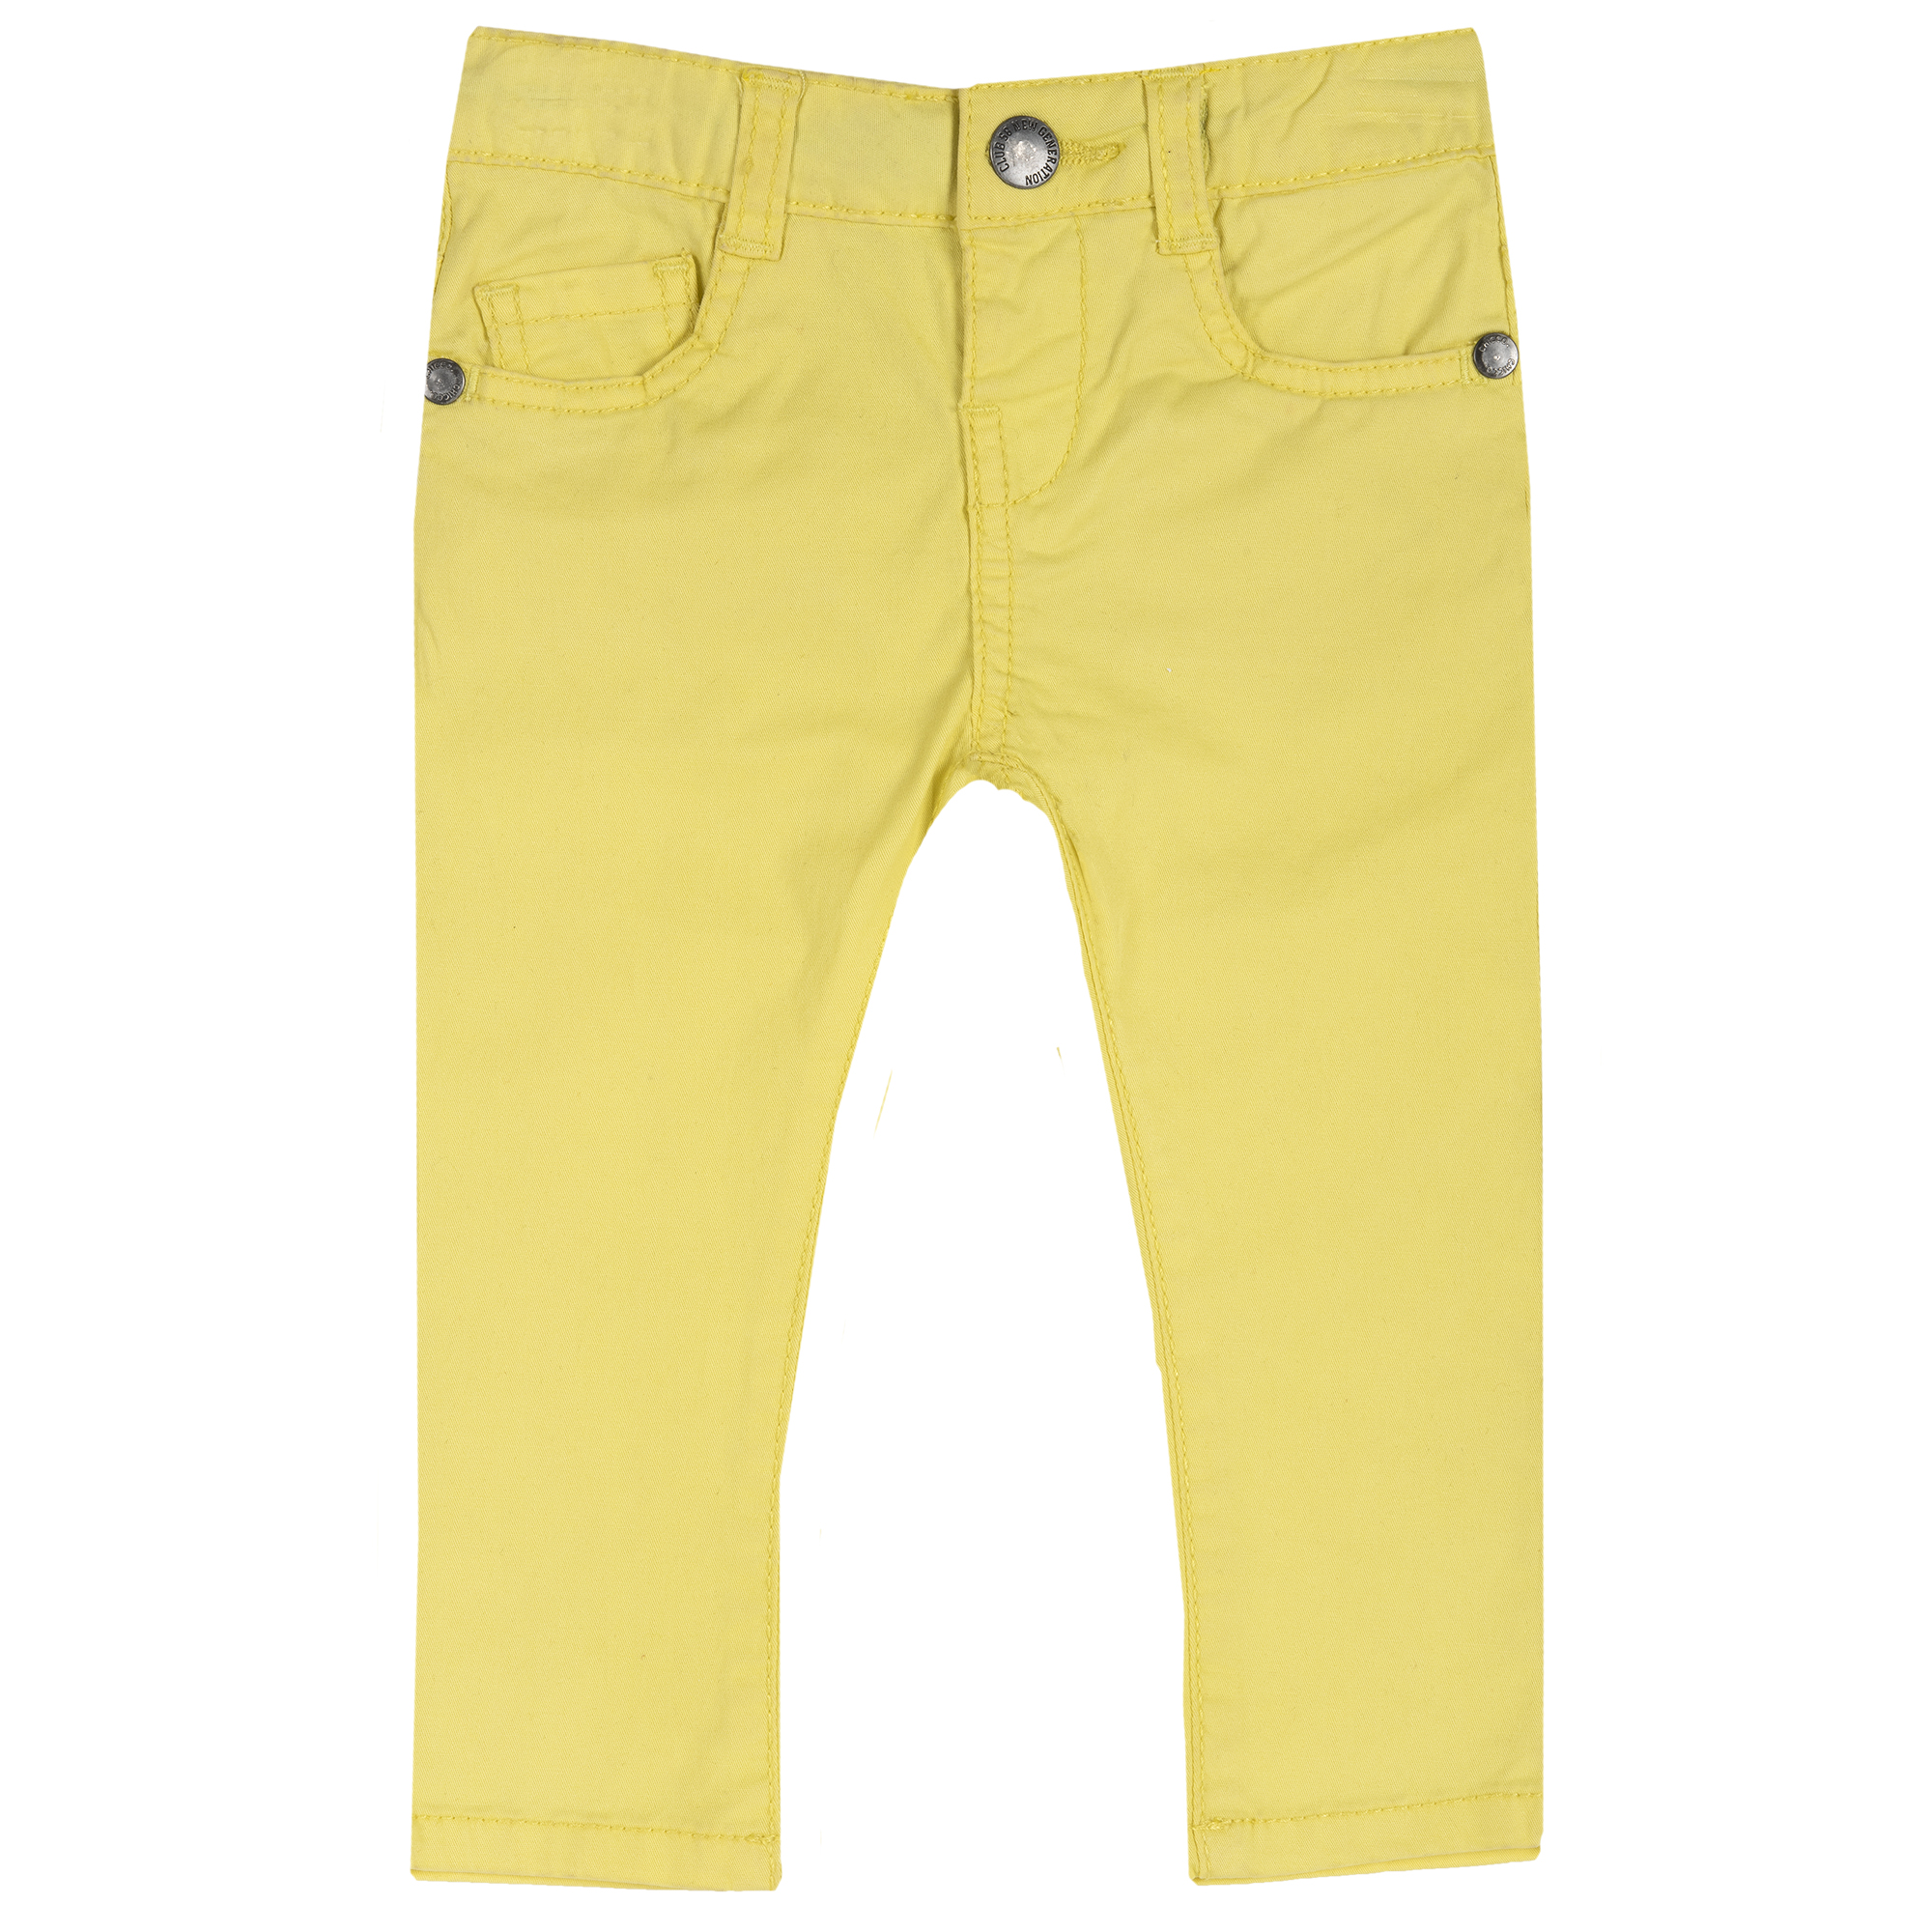 Pantalon lung copii Chicco, galben, 08138 08138